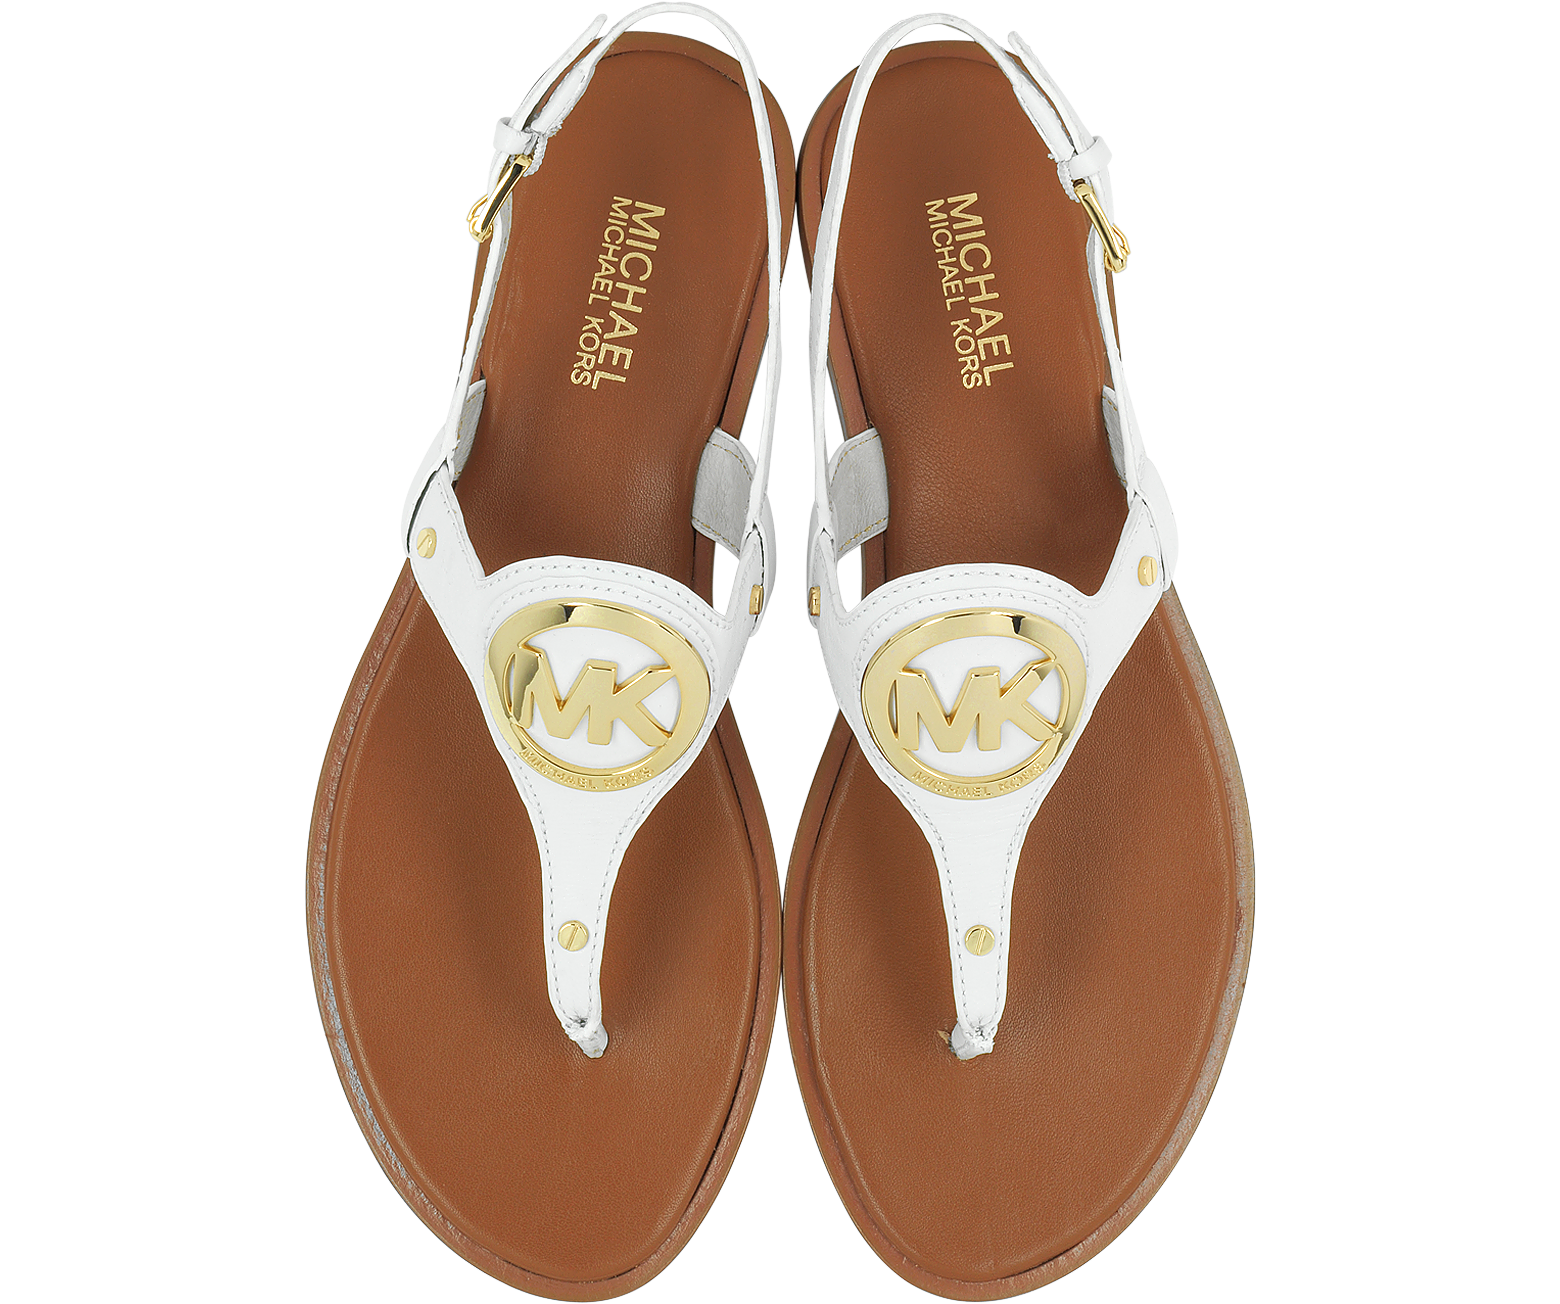 Michael Kors Aubrey - White Leather Thong Sandal 6M US at FORZIERI